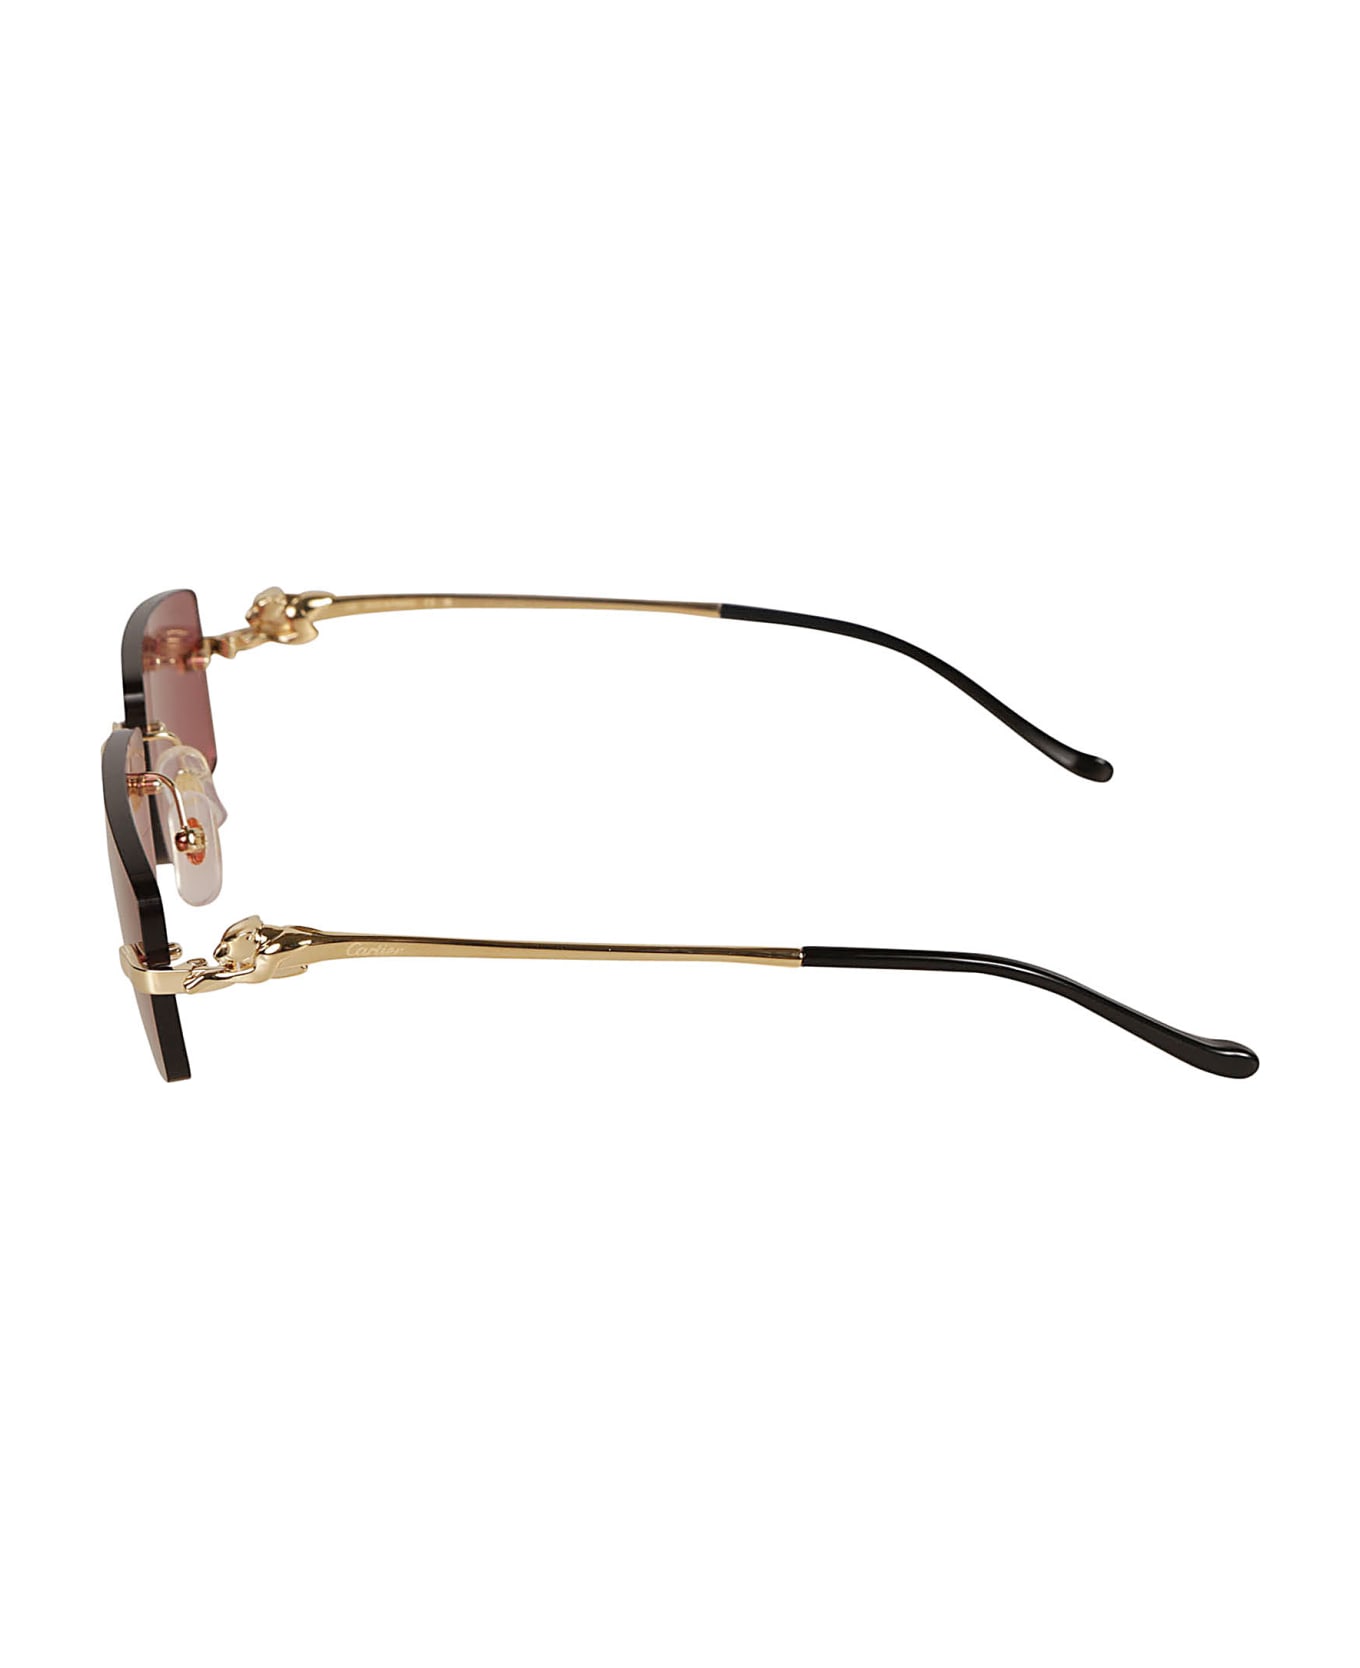 Cartier Eyewear Rectangular Long Sunglasses Sunglasses - Gold/Red サングラス